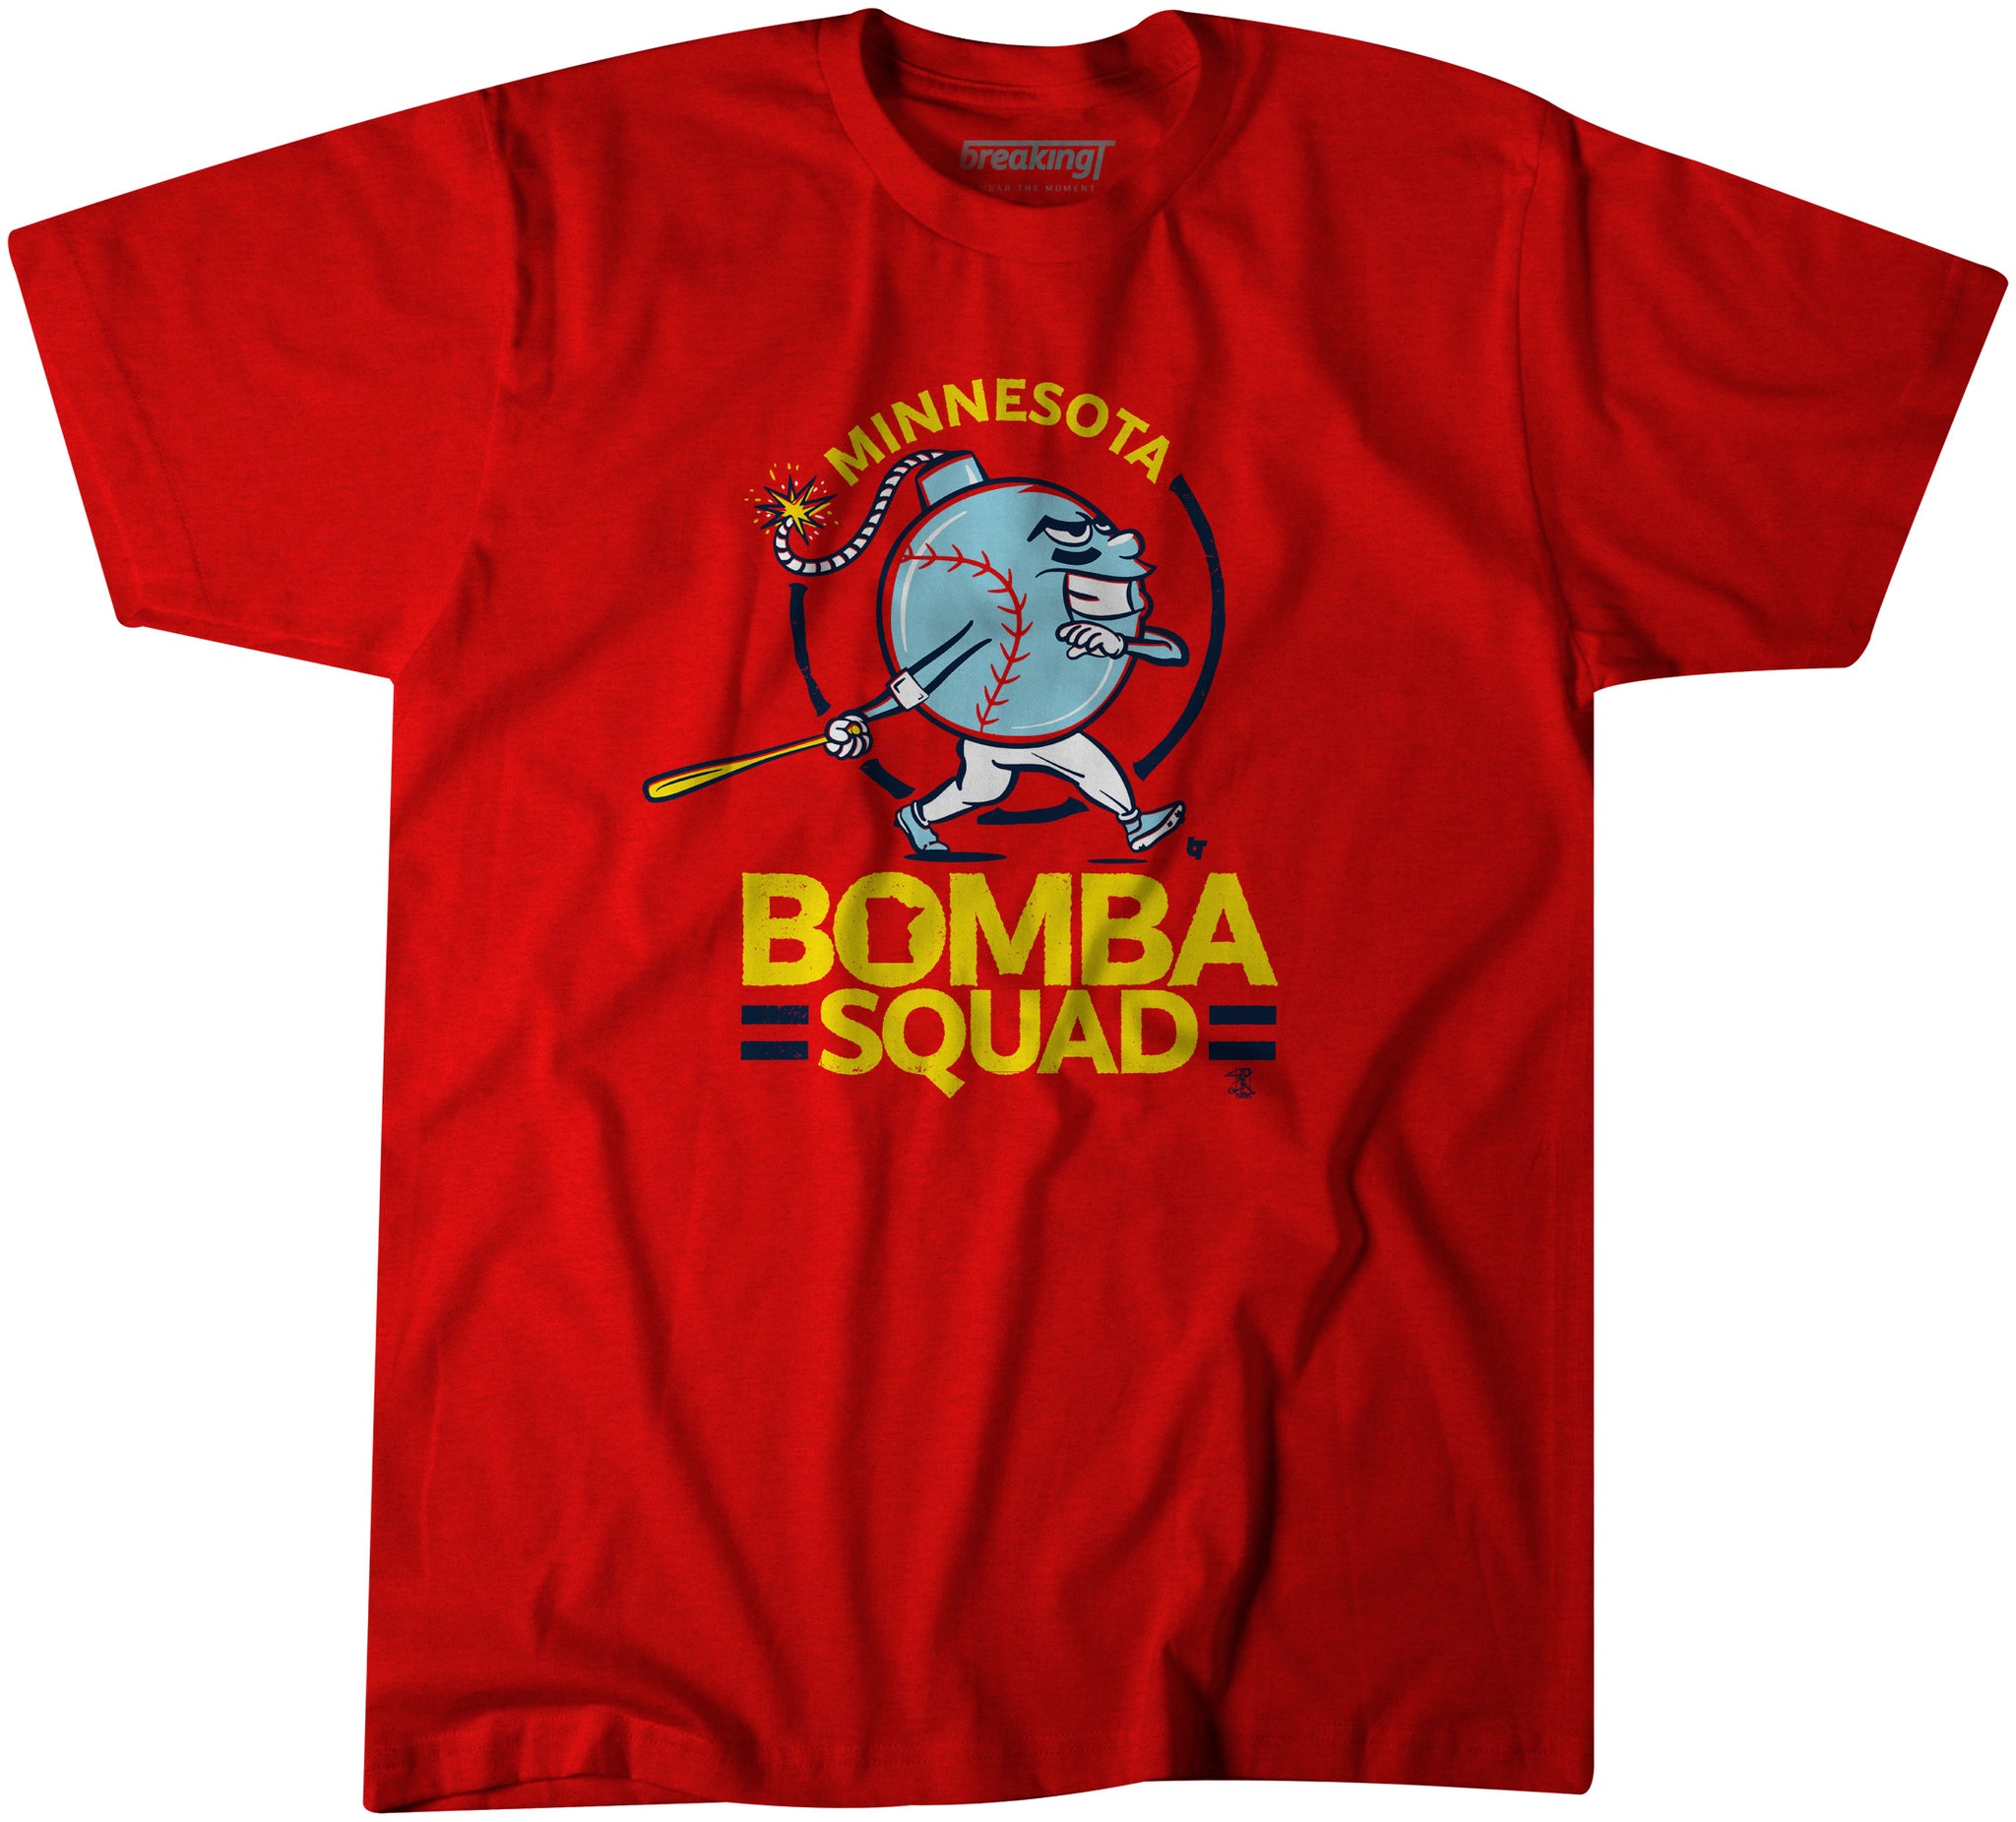 bomba squad t shirt